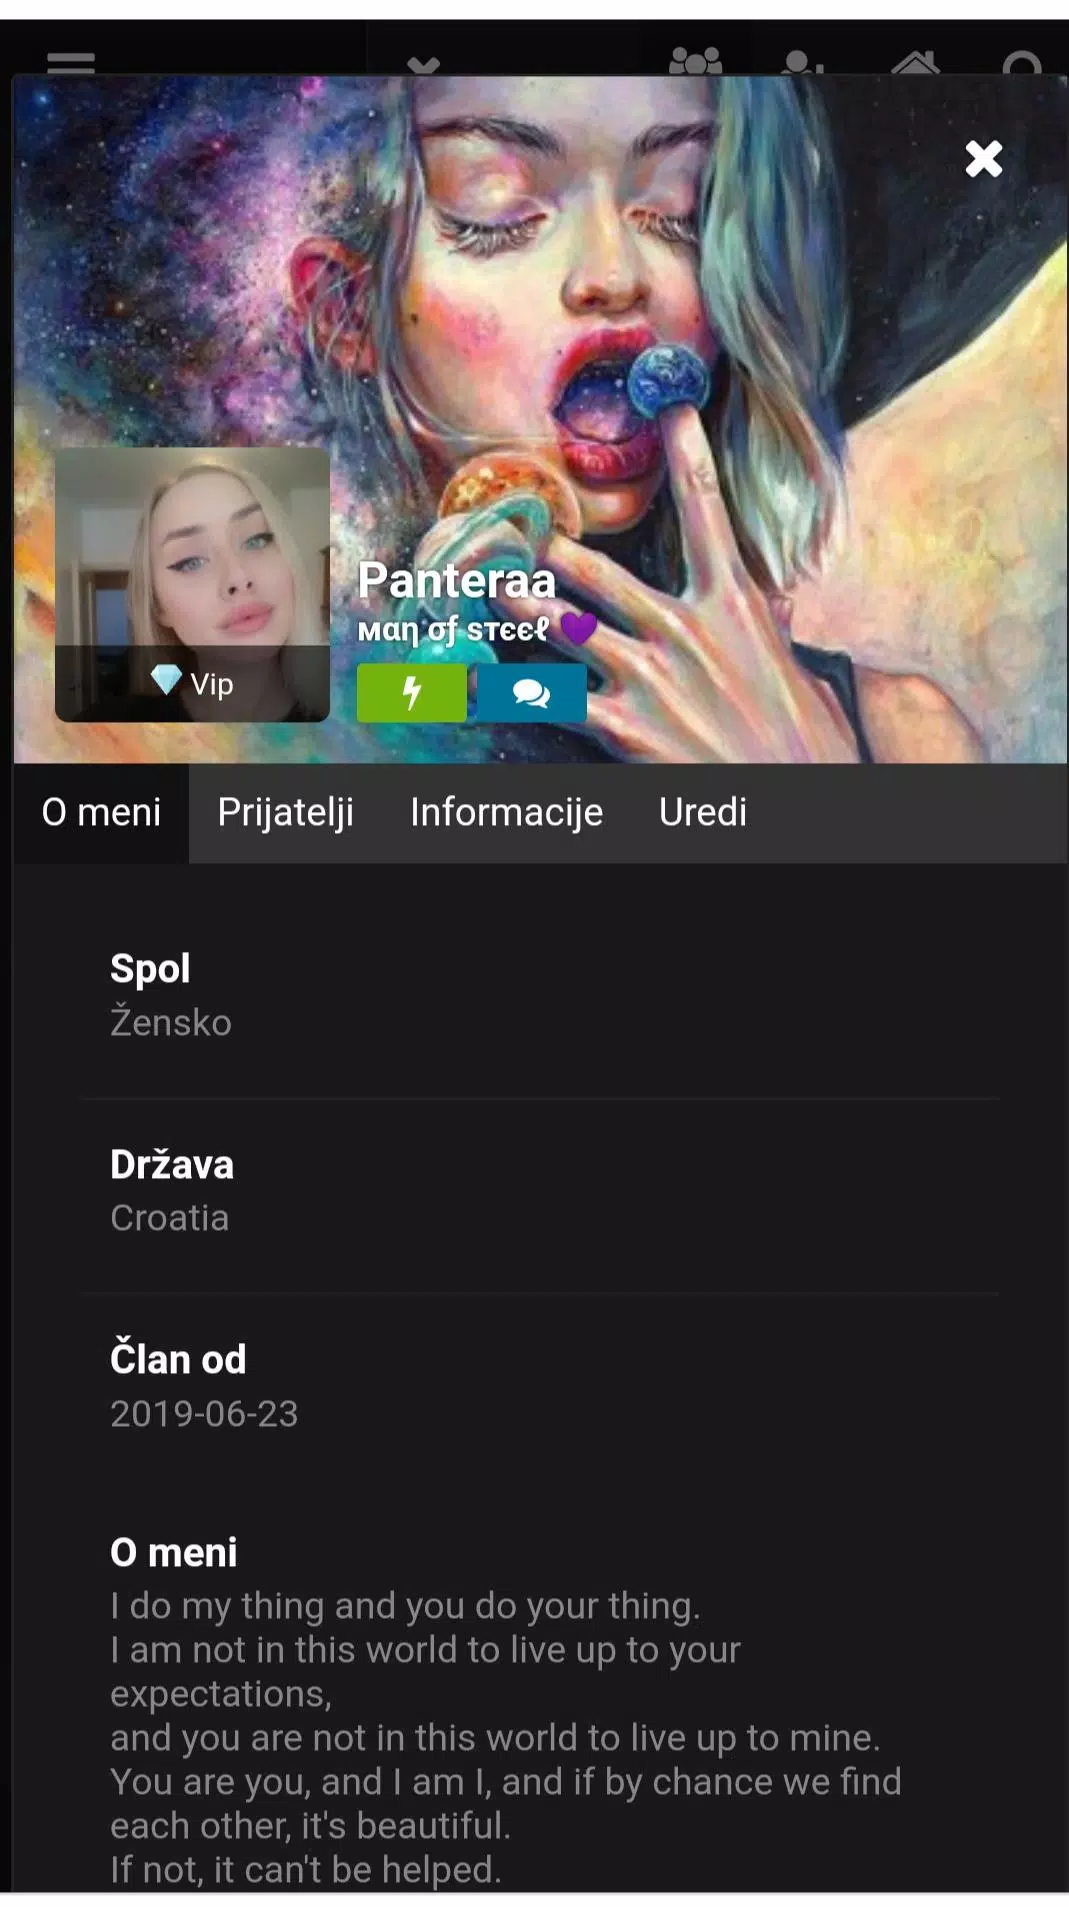 Hrvatski live chat